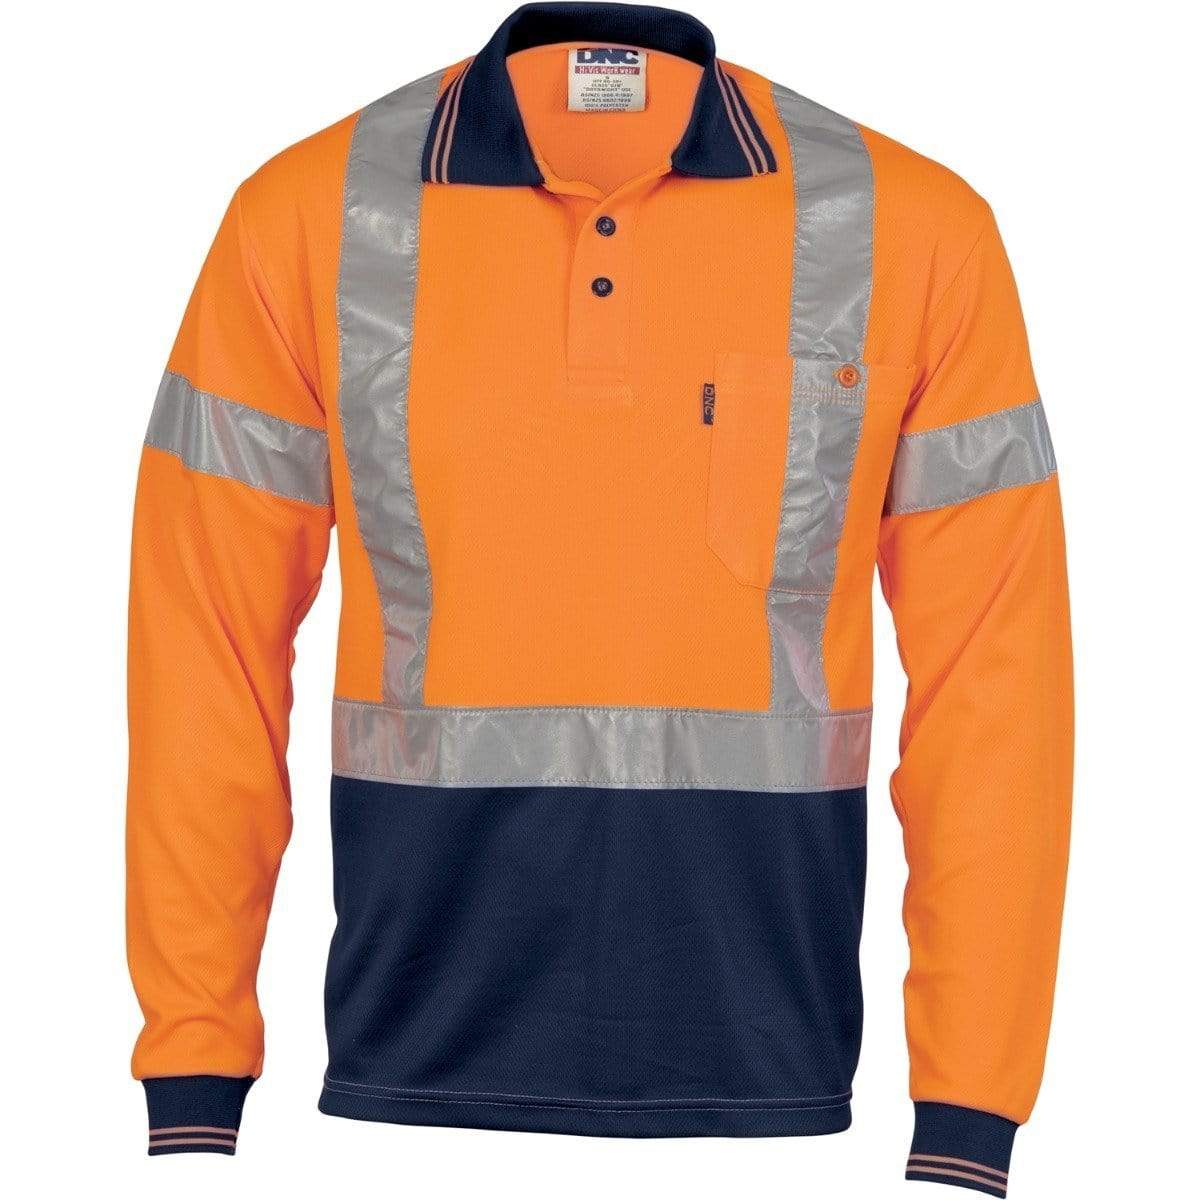 Dnc Workwear Hi-vis D/n Cool-breathe Long Sleeve Polo Shirt With Cross-back R/tape - 3914 Work Wear DNC Workwear Orange/Navy XS 